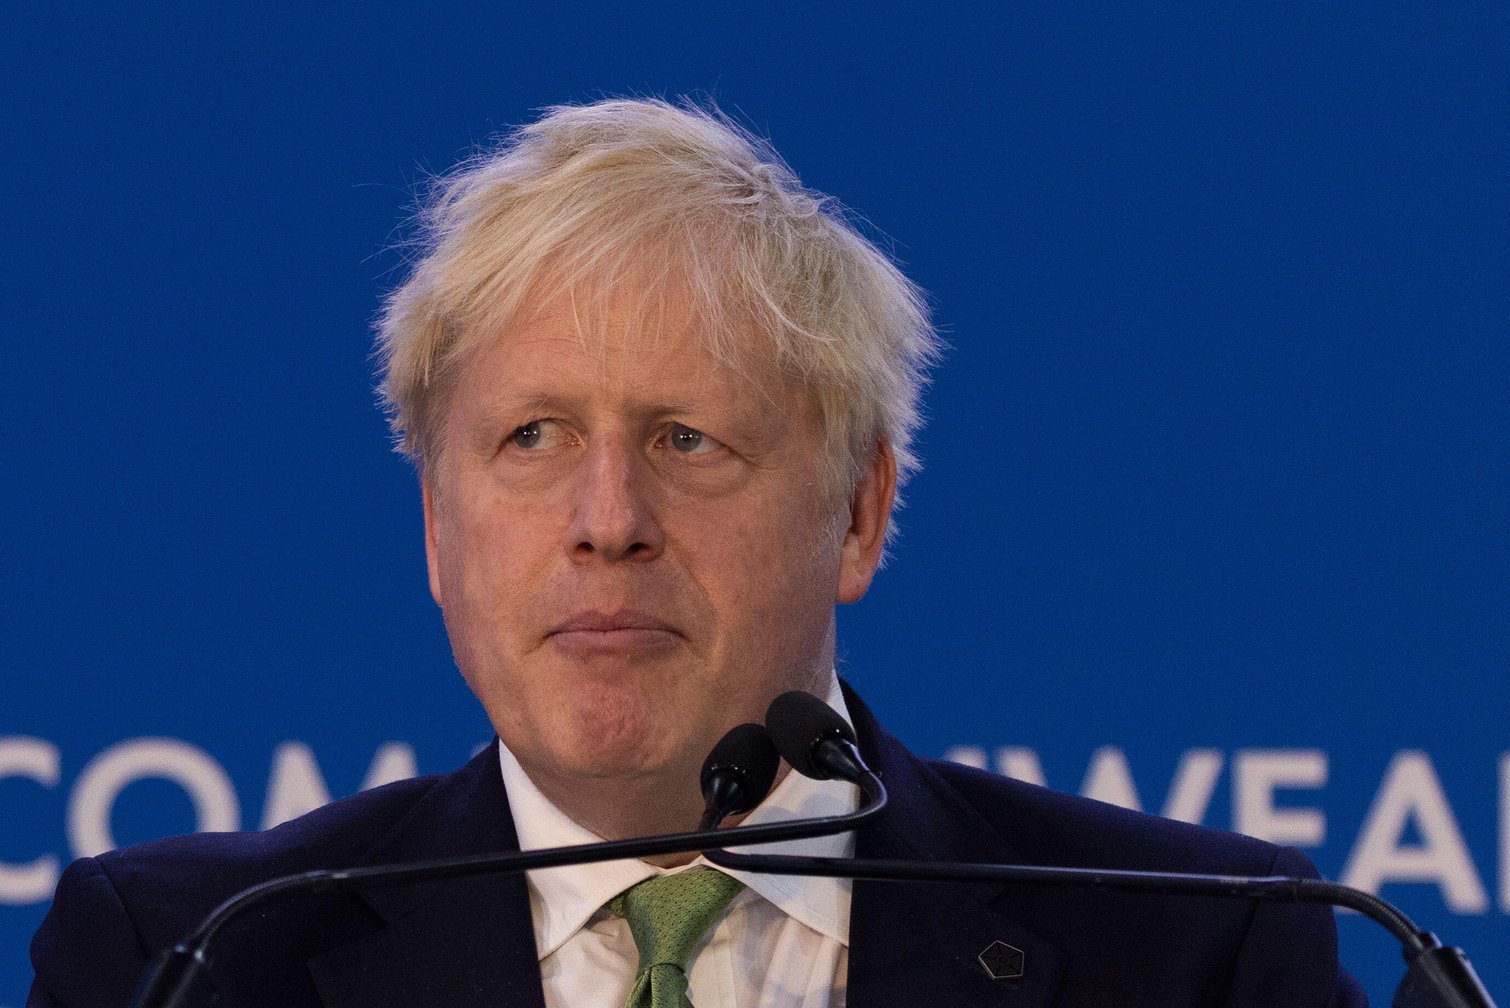 Boris Johnson | PA Images / Alamy Stock Photo 